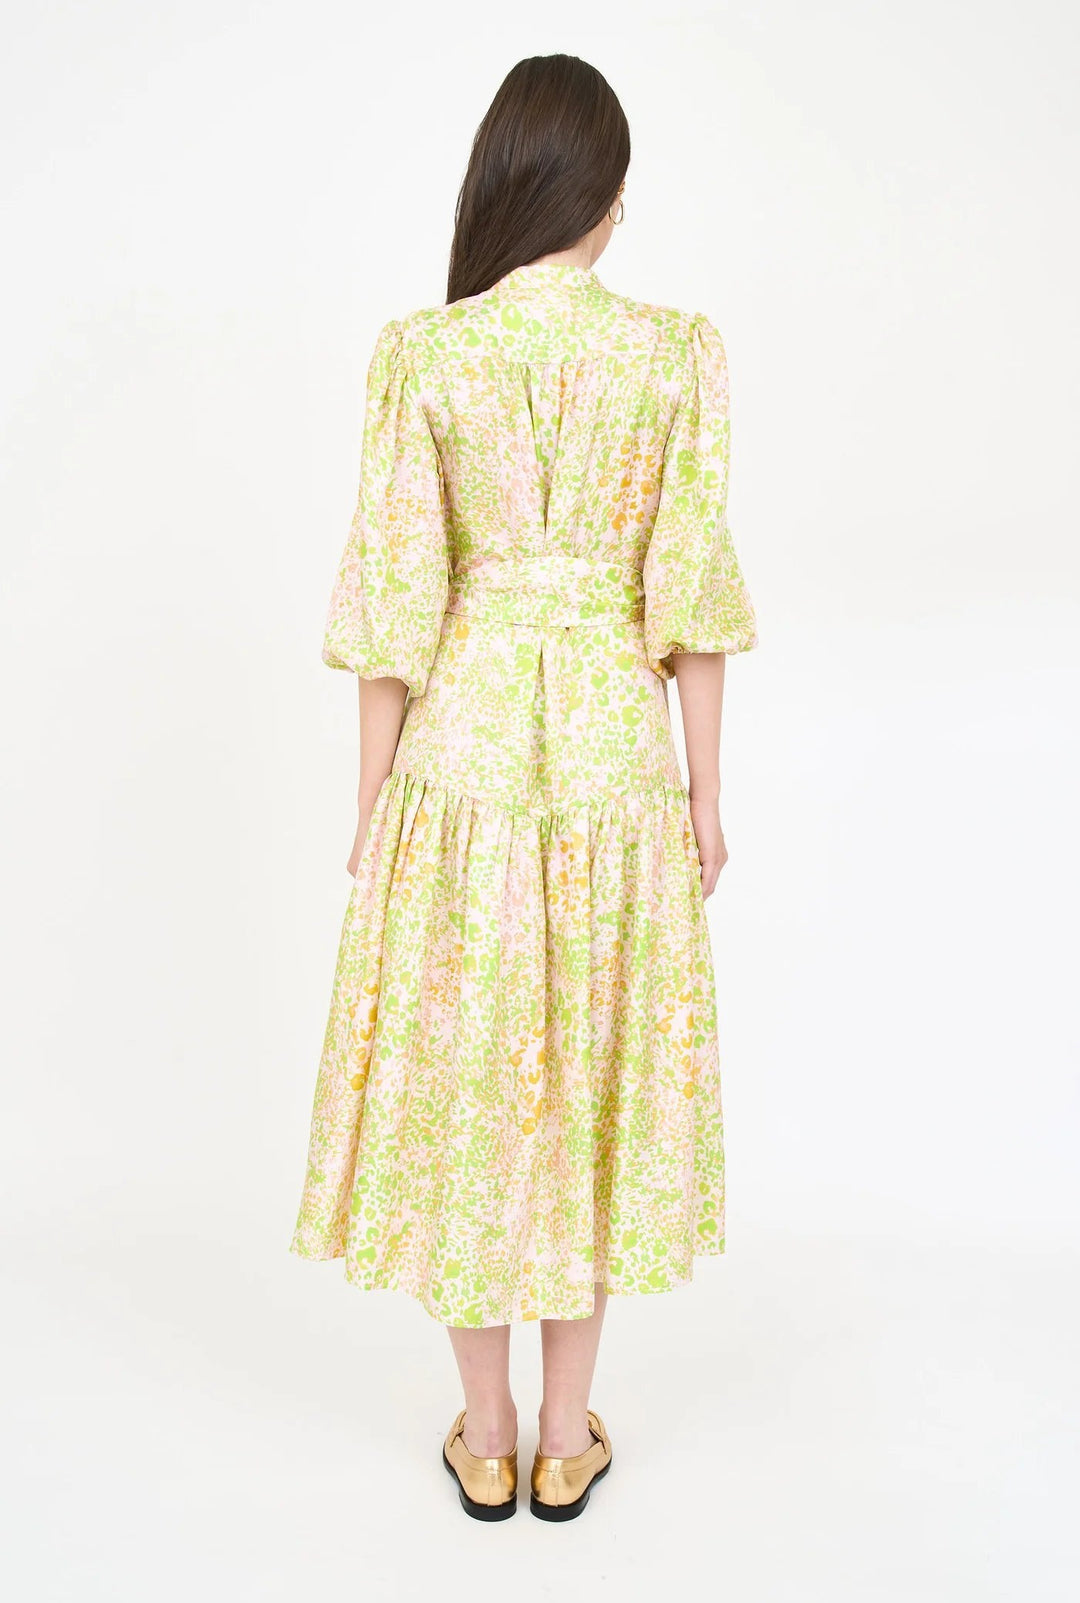 Christy Lynn Dress Christy Lynn | Lana Dress in Lime Floral